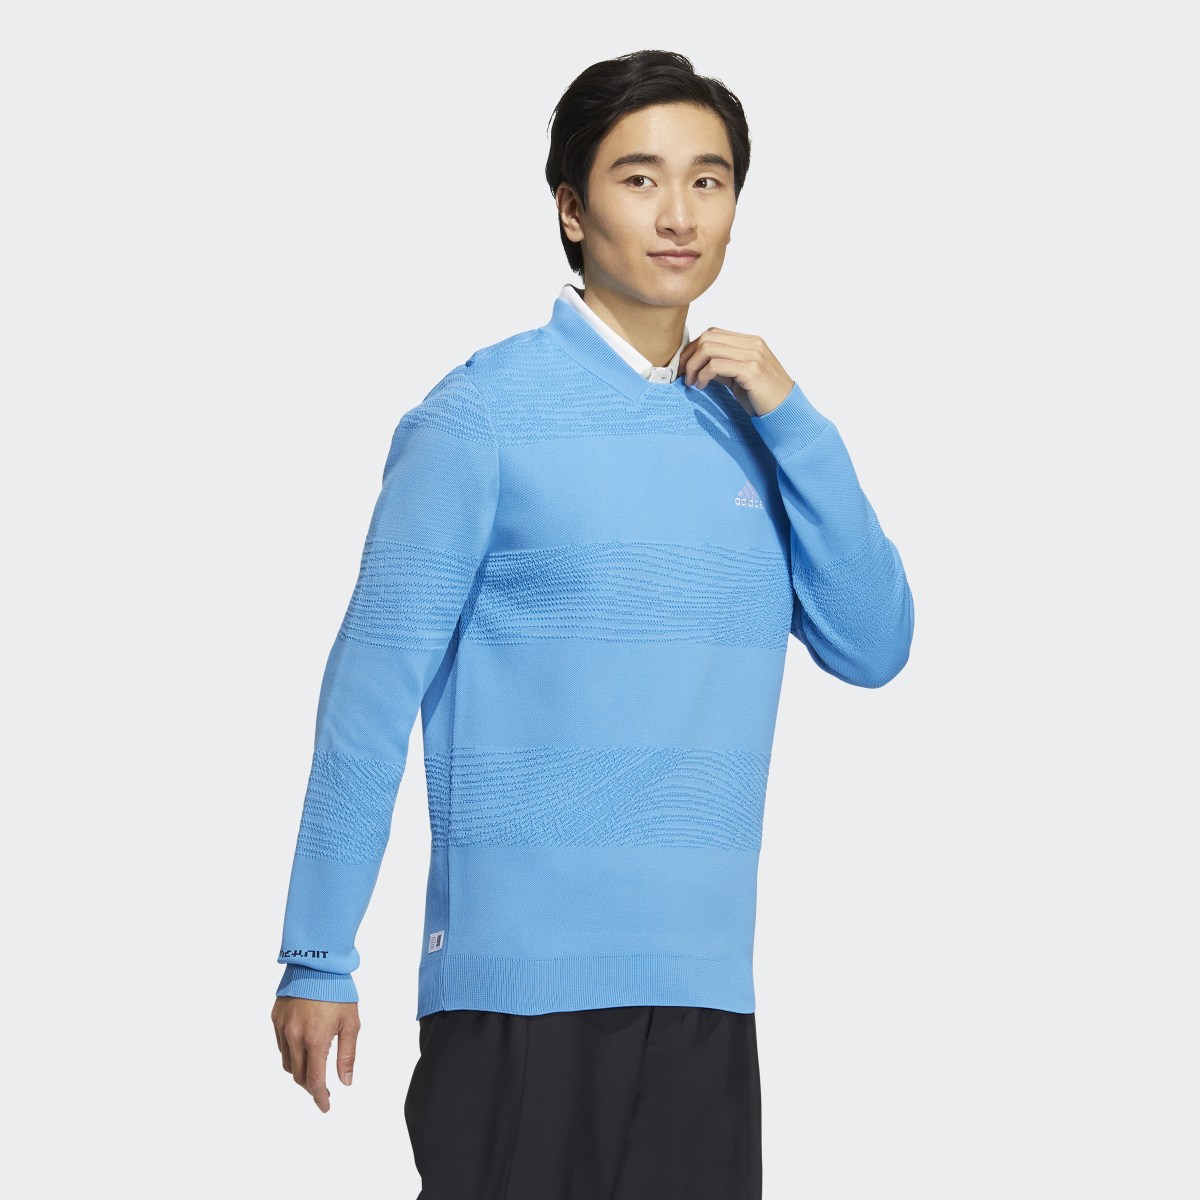 Adidas Made to be Remade Crewneck Sweatshirt. 4